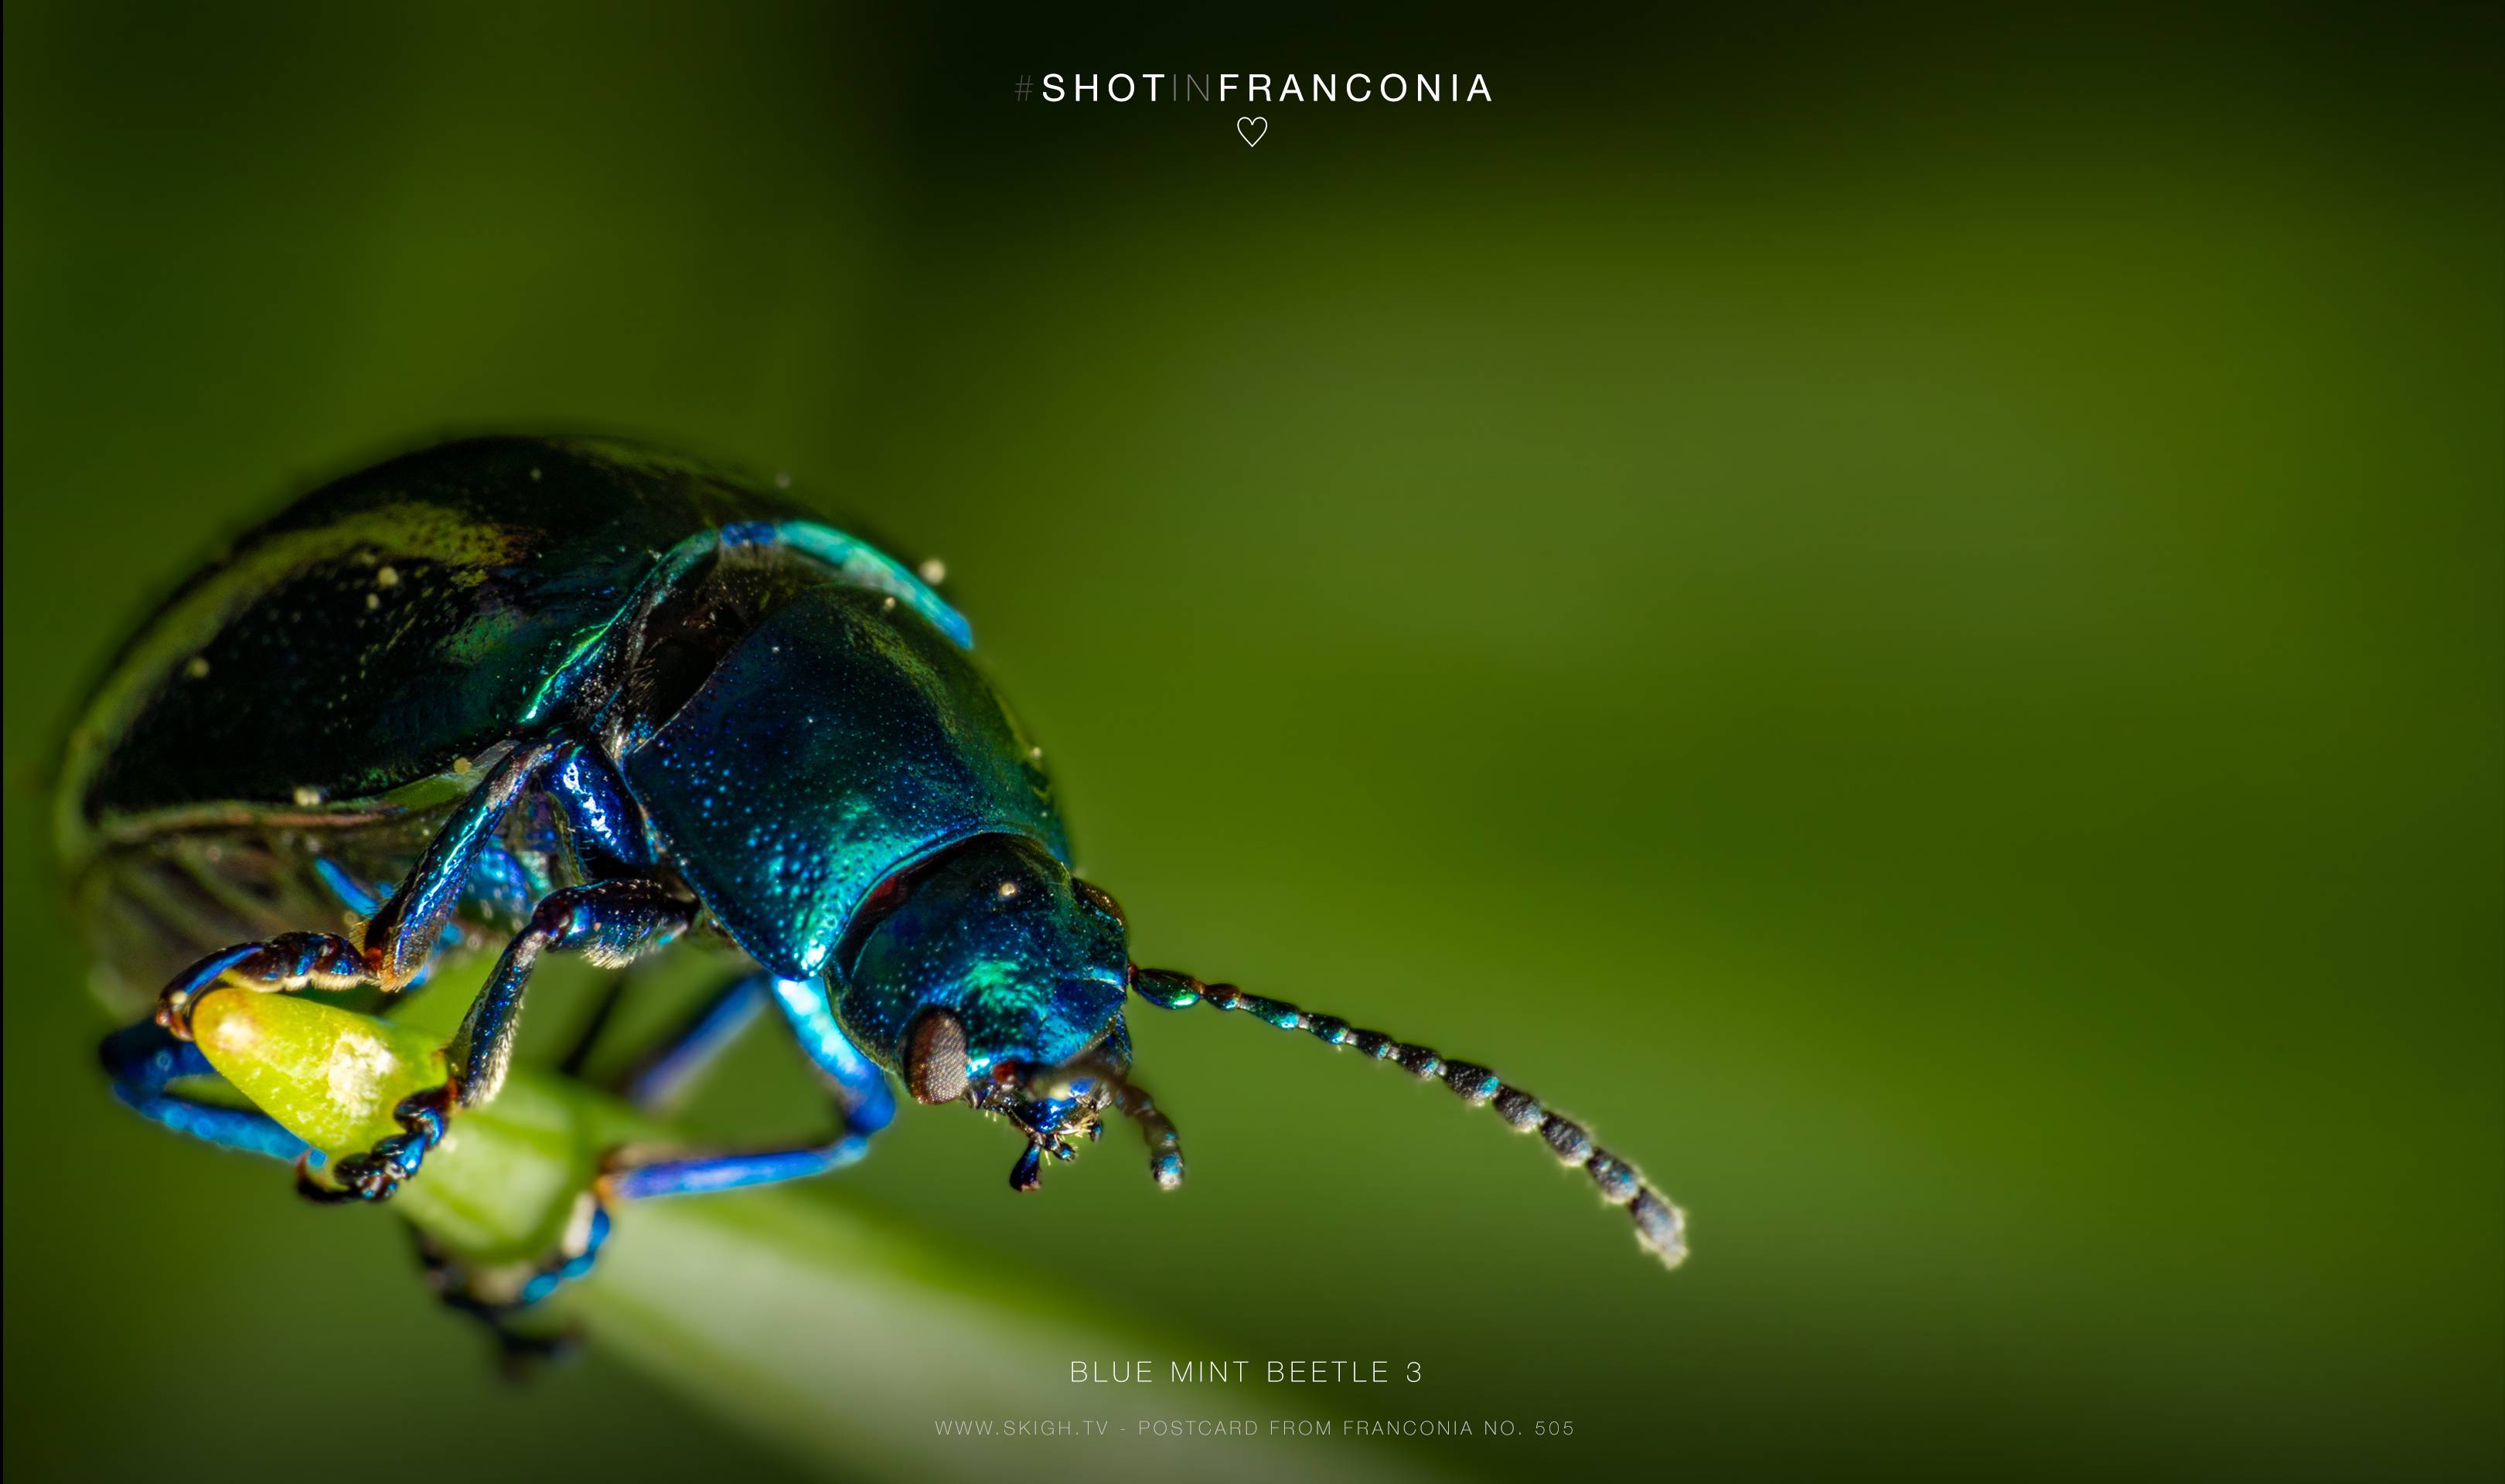 Blue mint beetle 3